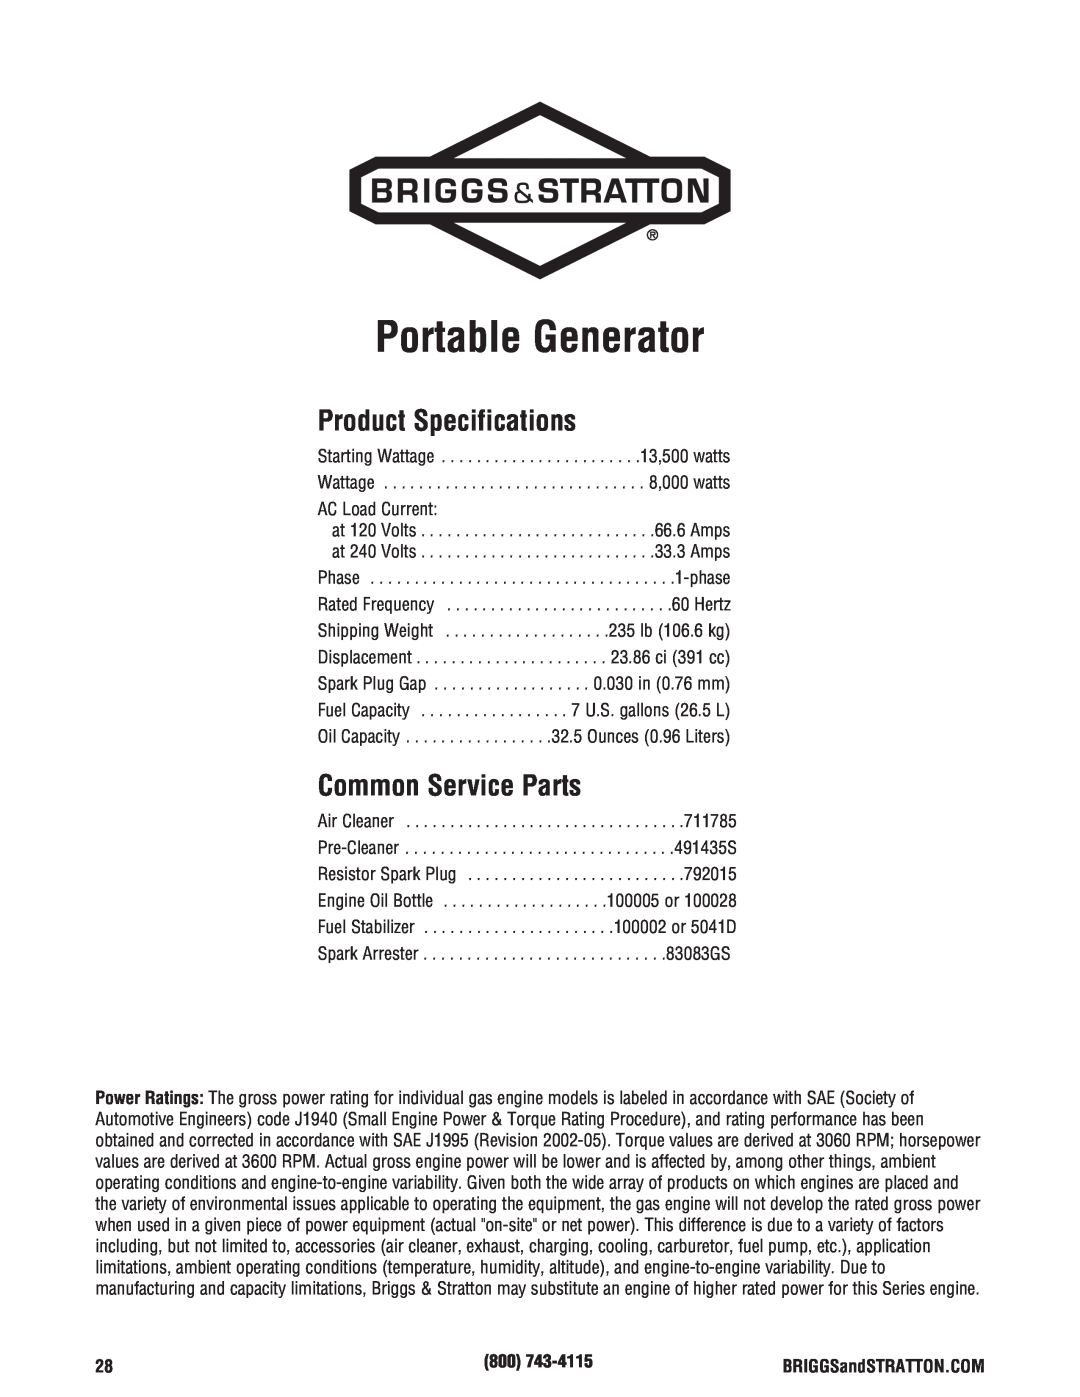 Briggs & Stratton 8000 Watt Portable Generator manual Product Specifications, Common Service Parts 